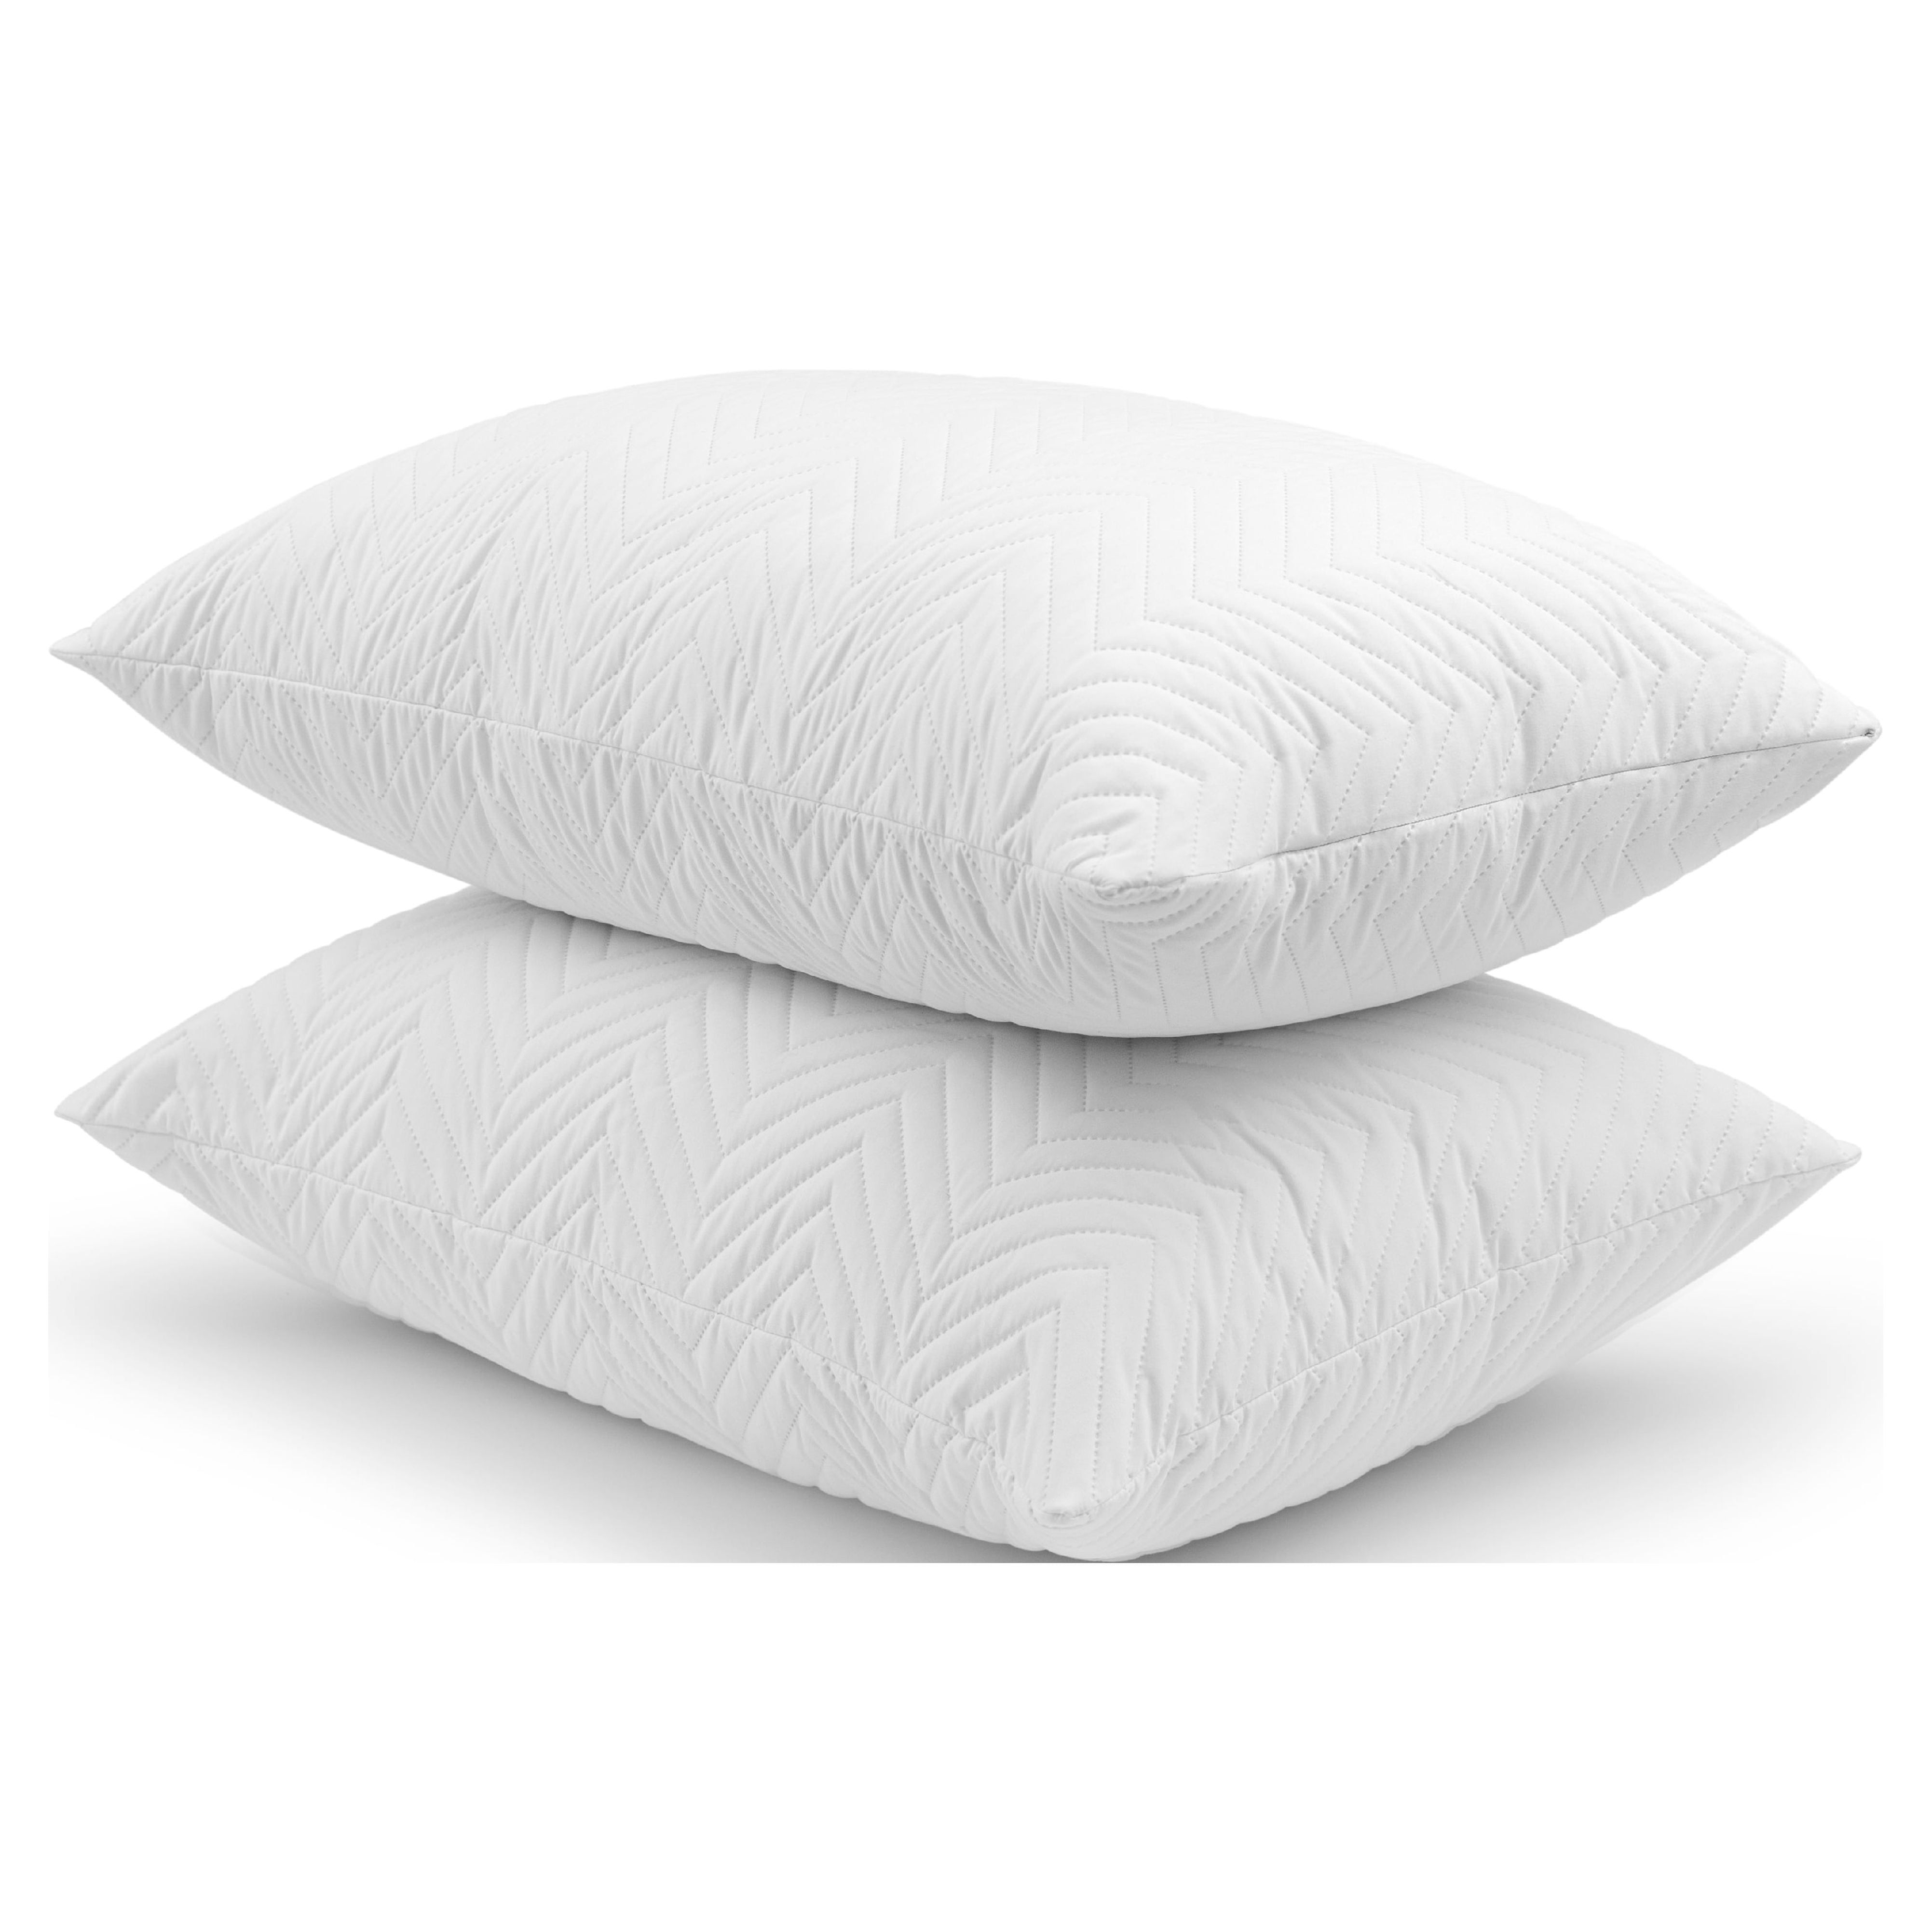 2 Count) Beautyrest Silver® Quilted Comfort™ Memory Foam Bed Pillows,  Standard/Queen 